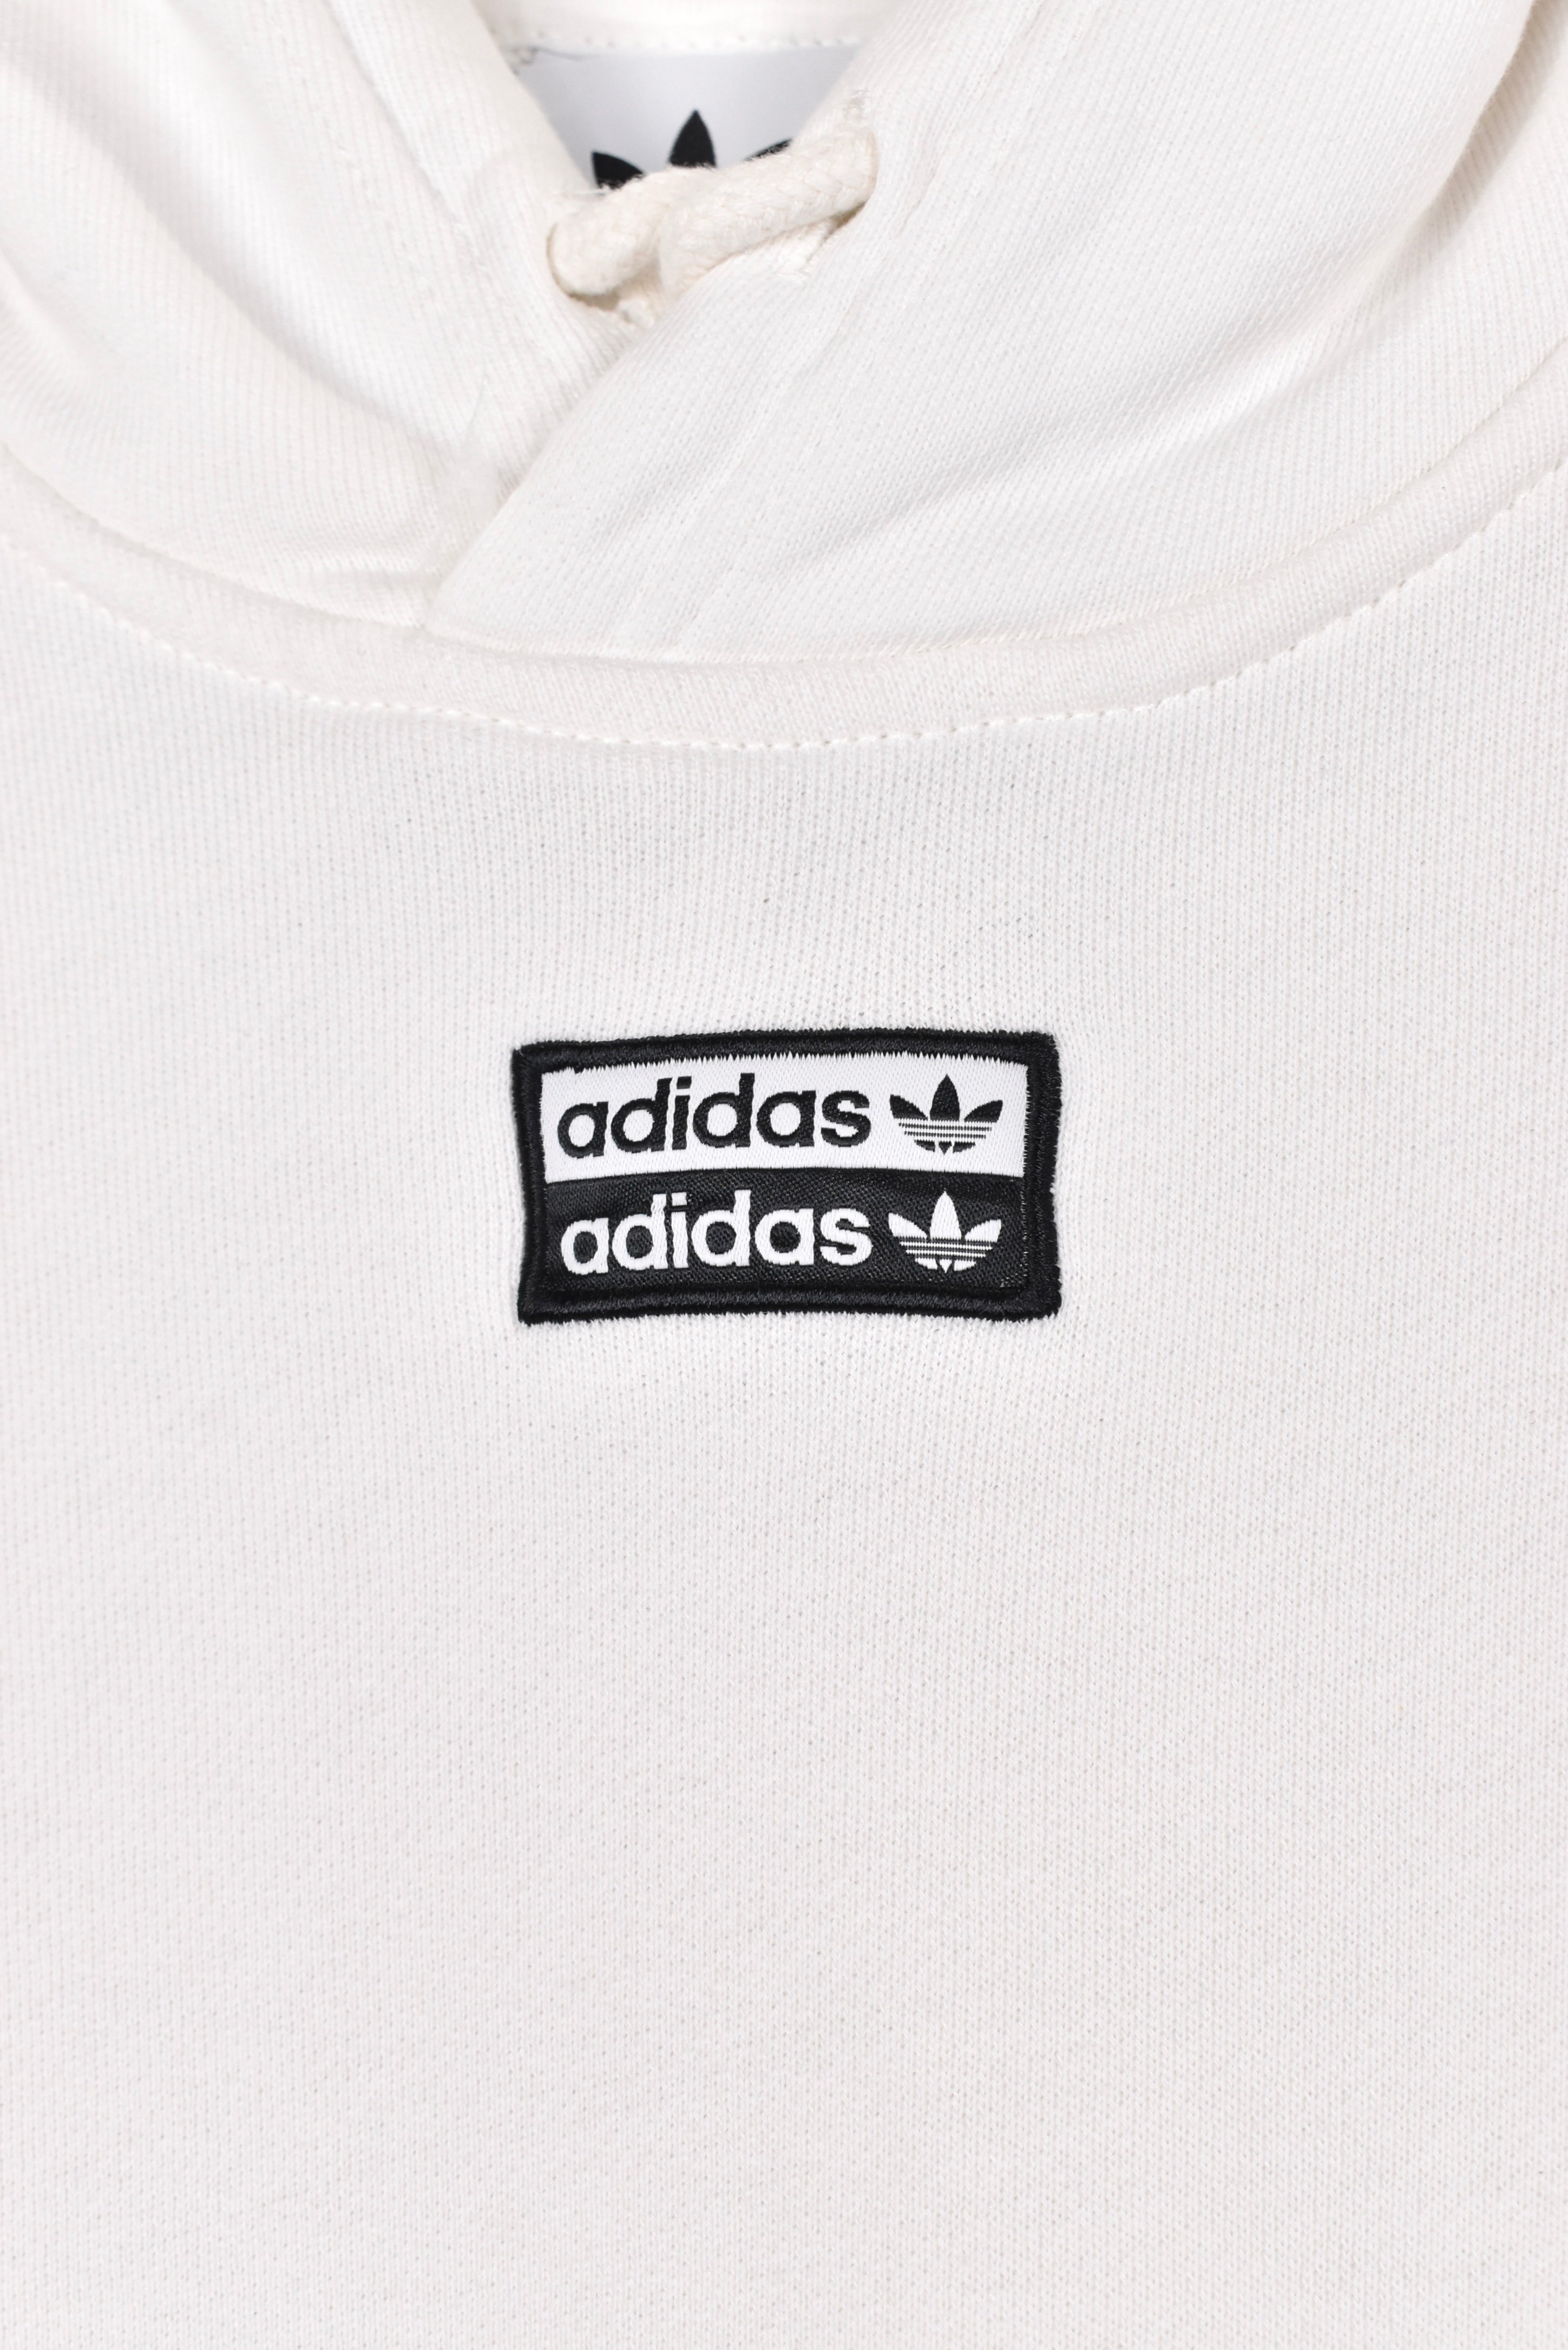 Modern Adidas hoodie, white embroidered sweatshirt - AU Medium ADIDAS